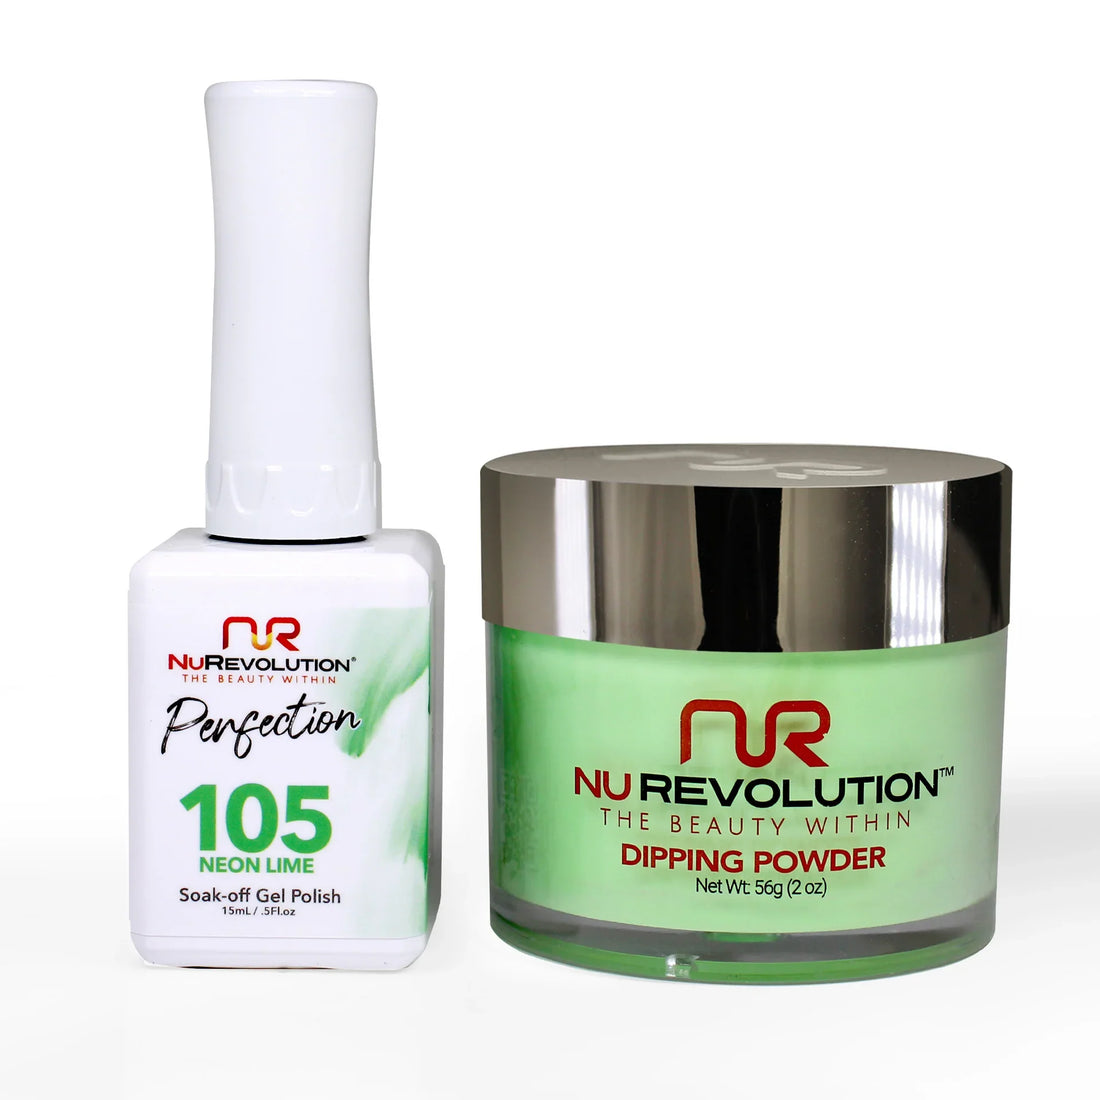 NuRevolution Perfection 105 Neon Lime